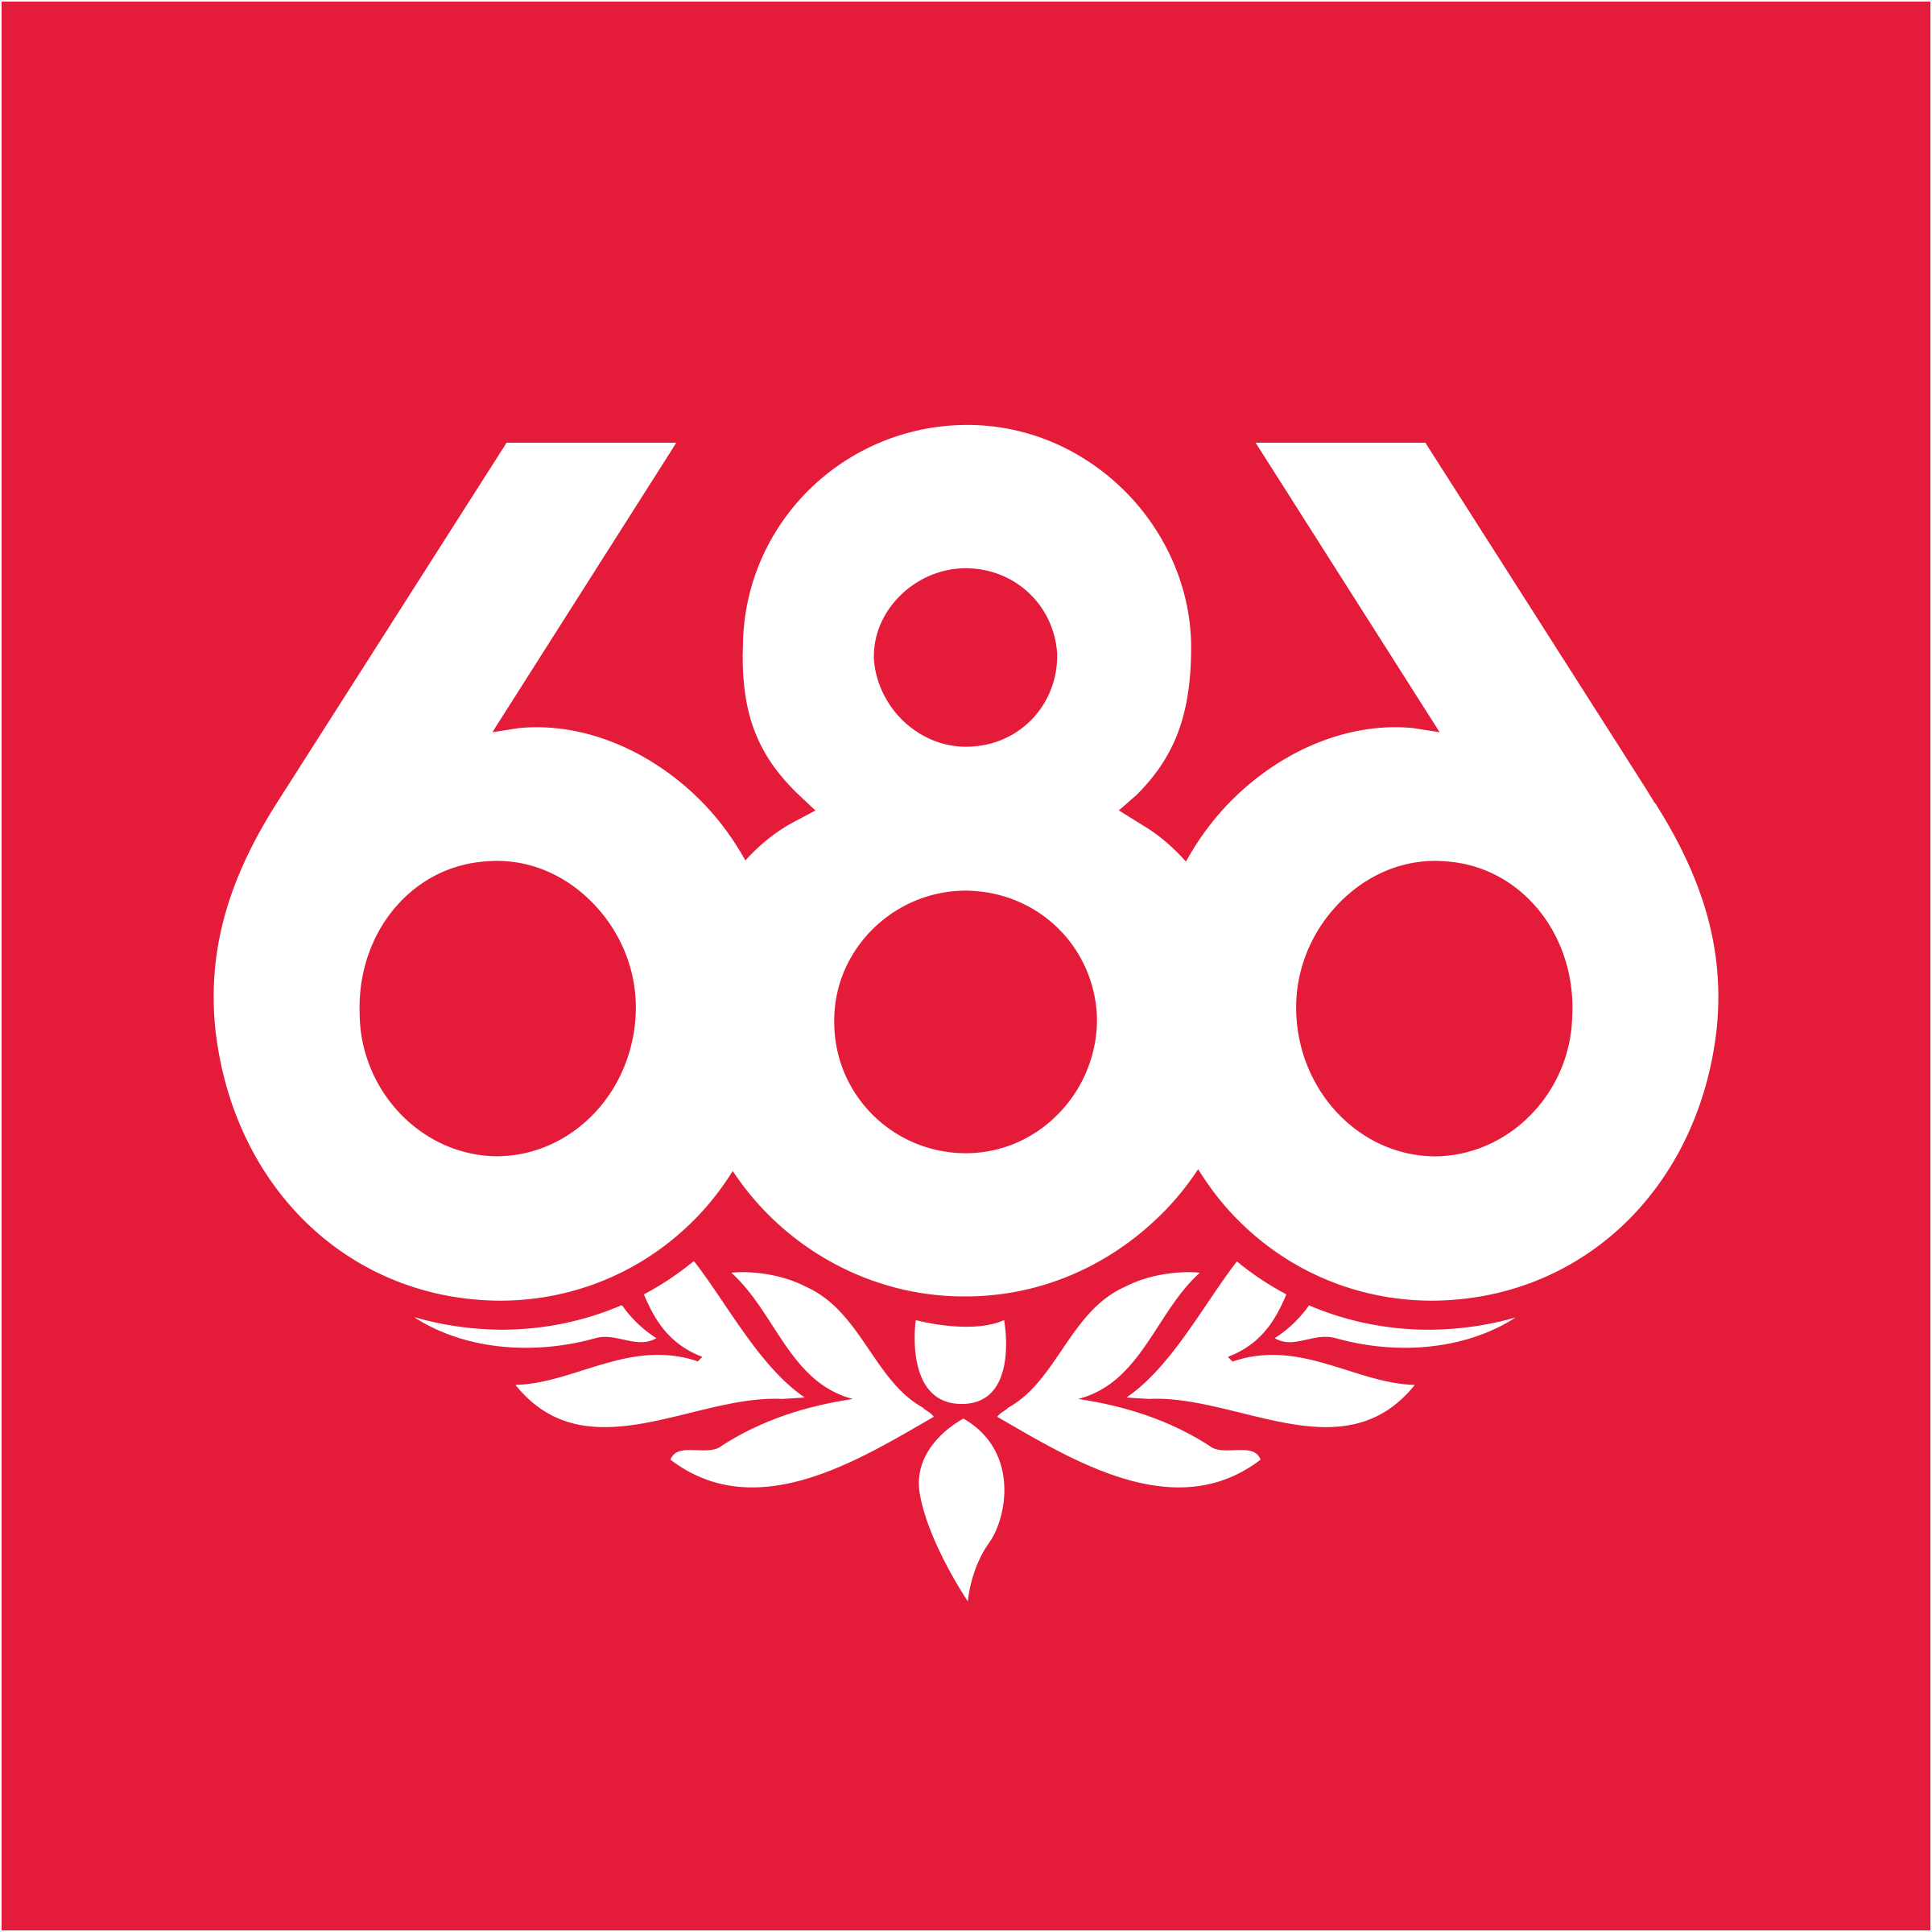 686 Enterprises